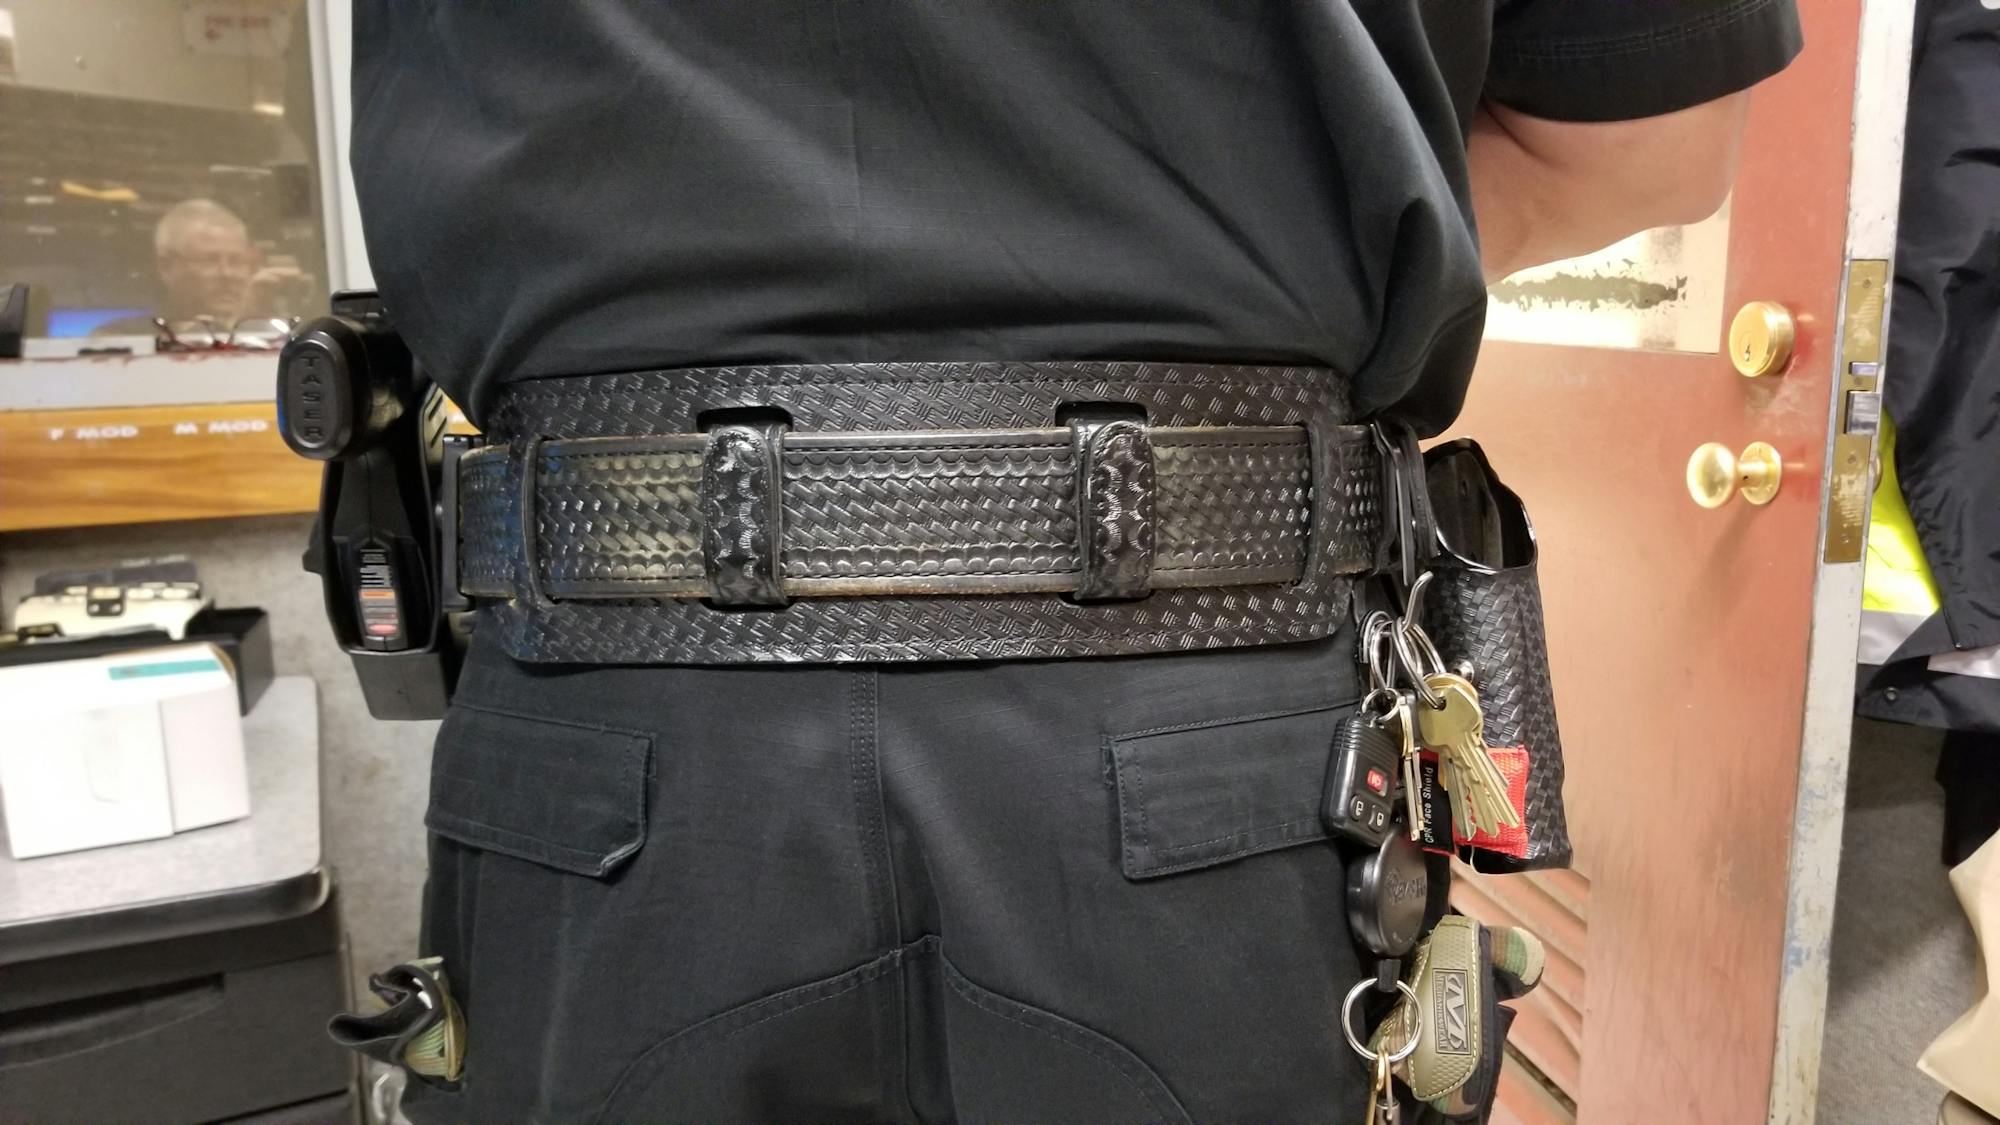 Additional Belt Keepers for BackUpBrace